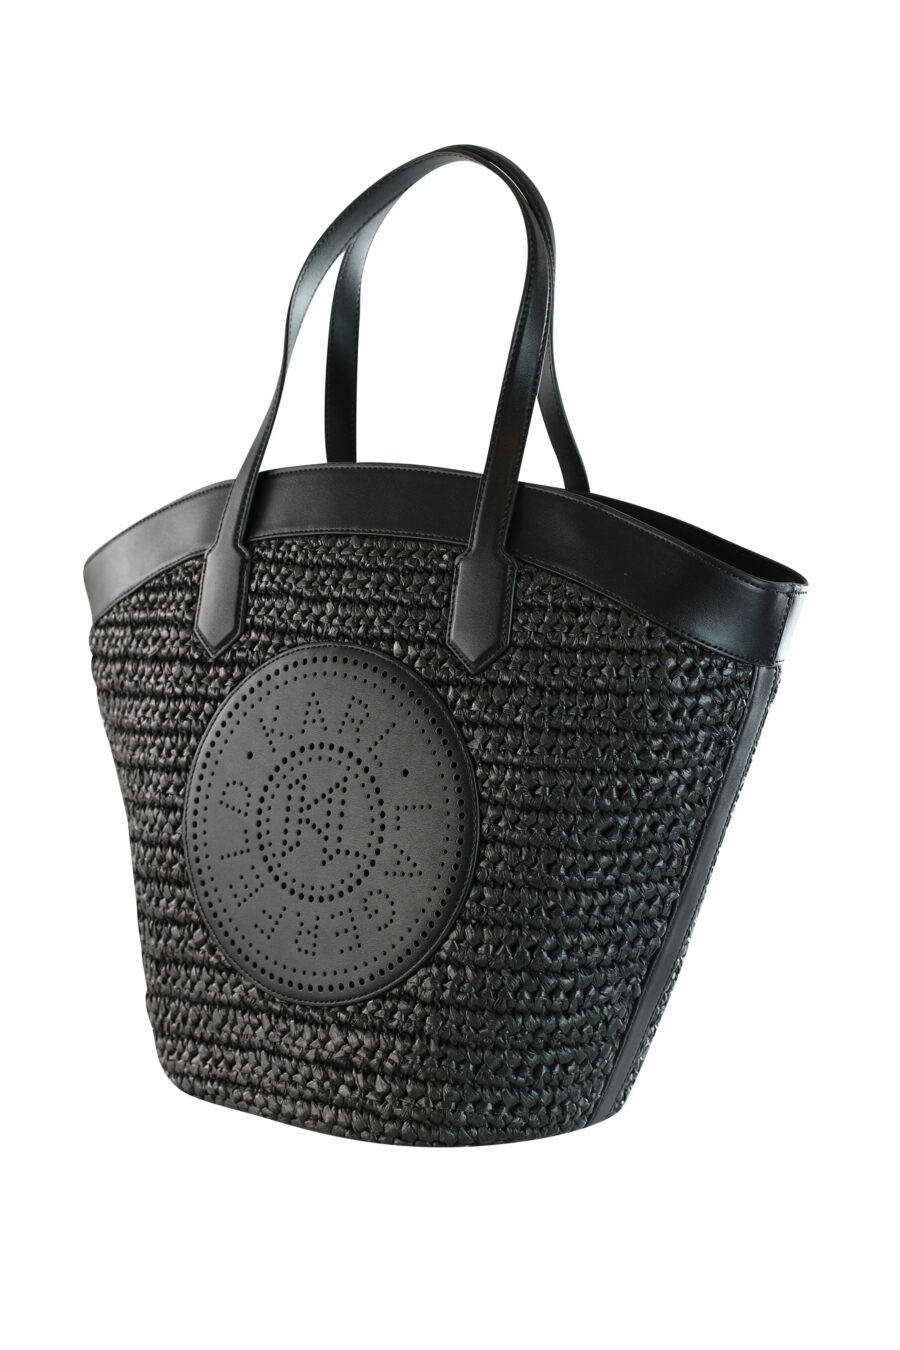 Tote bag negro con logo "k/tulip" - 8720744234791 2